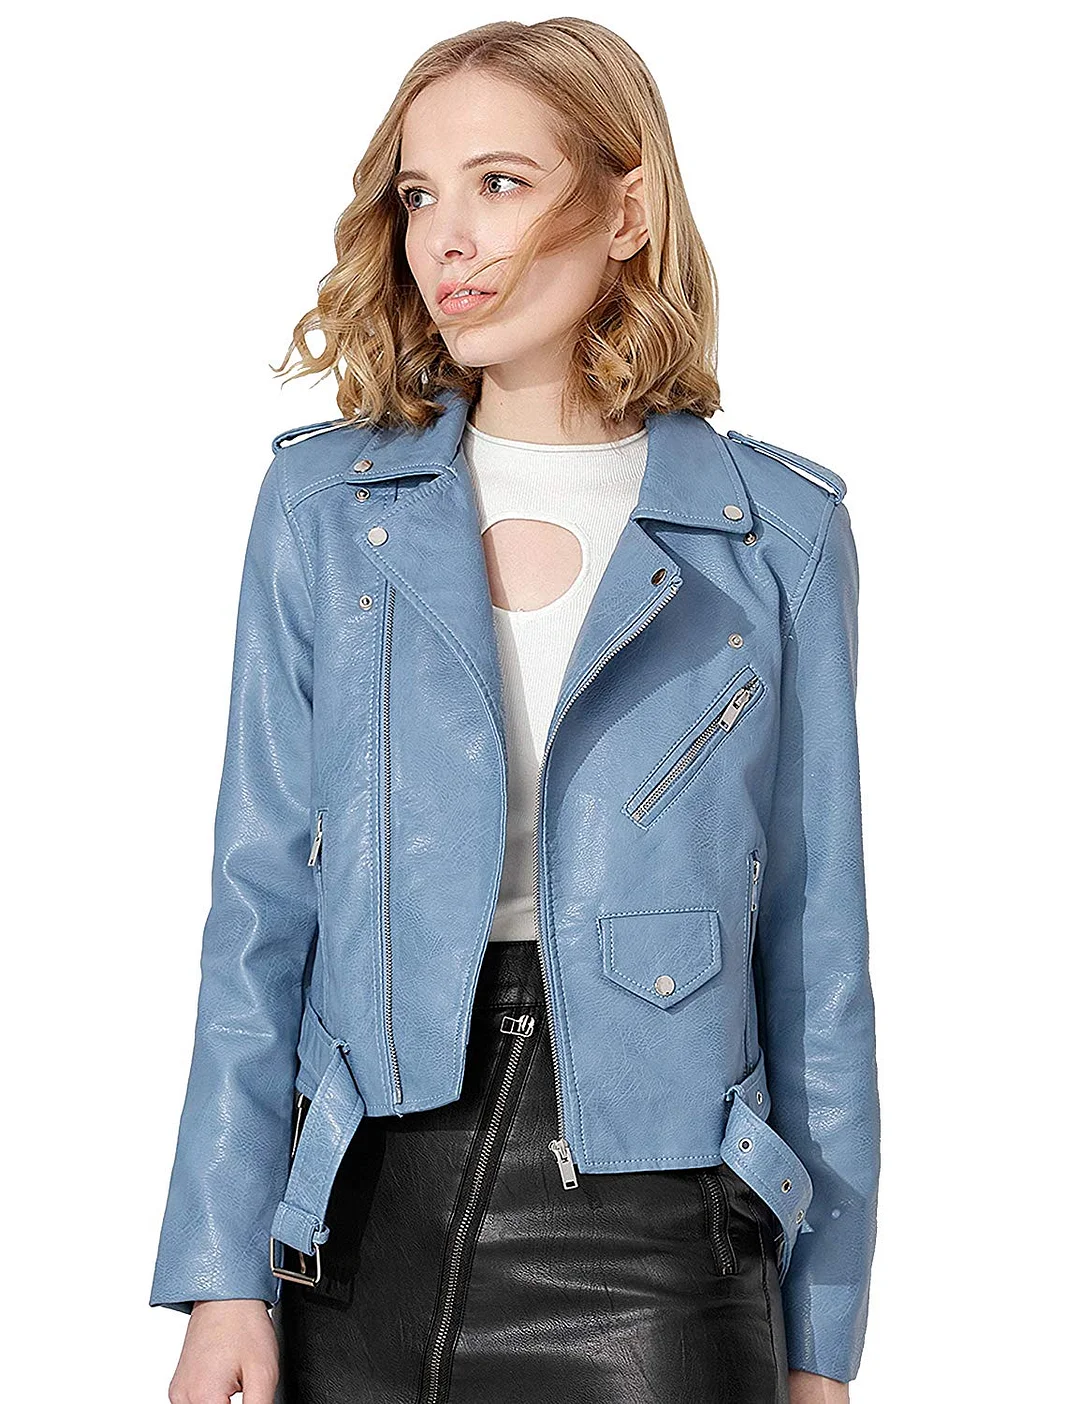 Women's Faux Leather Textured Short Moto Jacket Zip-up Slim PU Biker Coat with Pockets